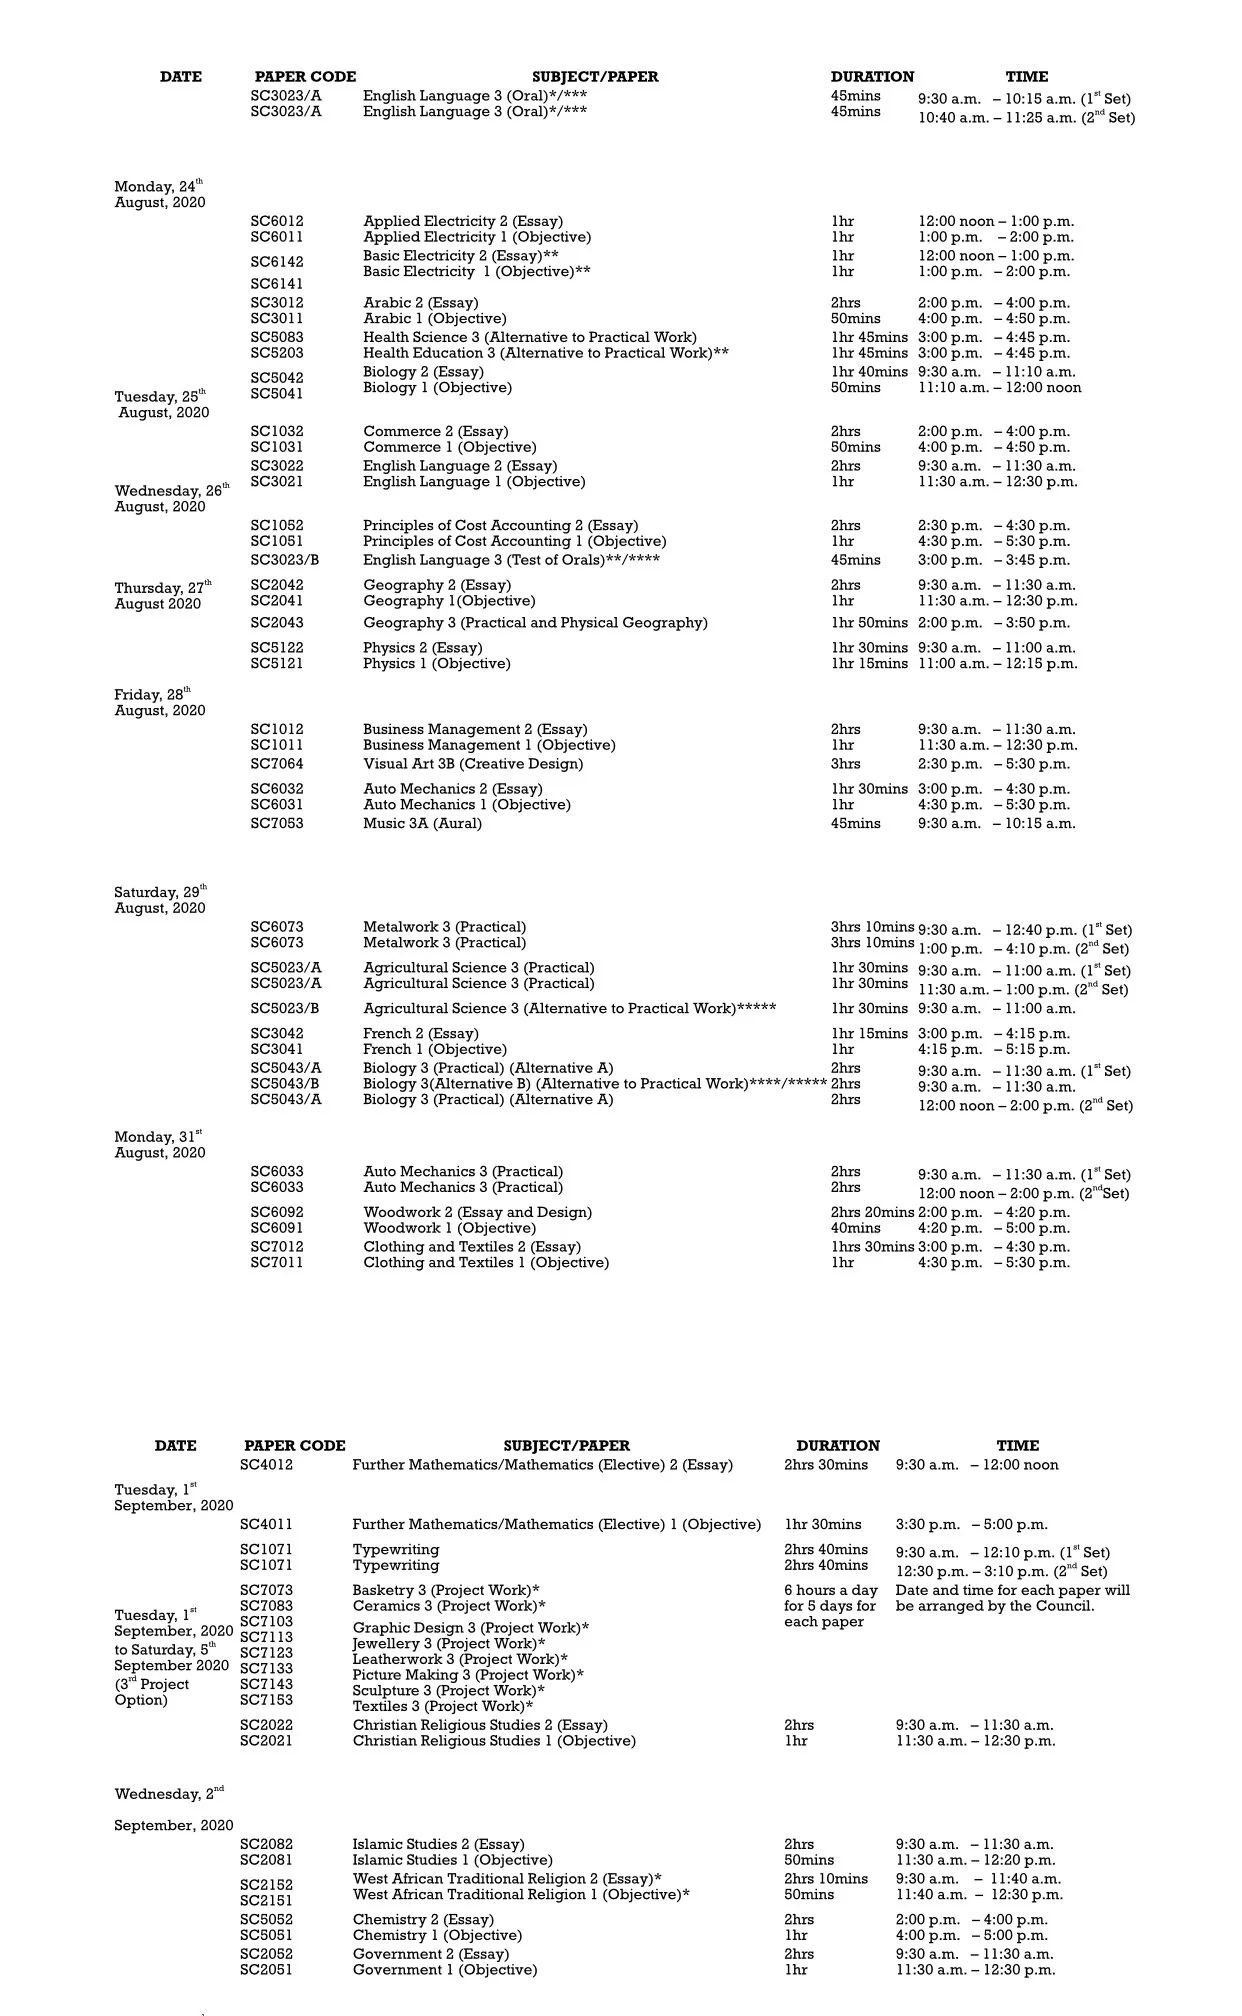 waec timetable 2